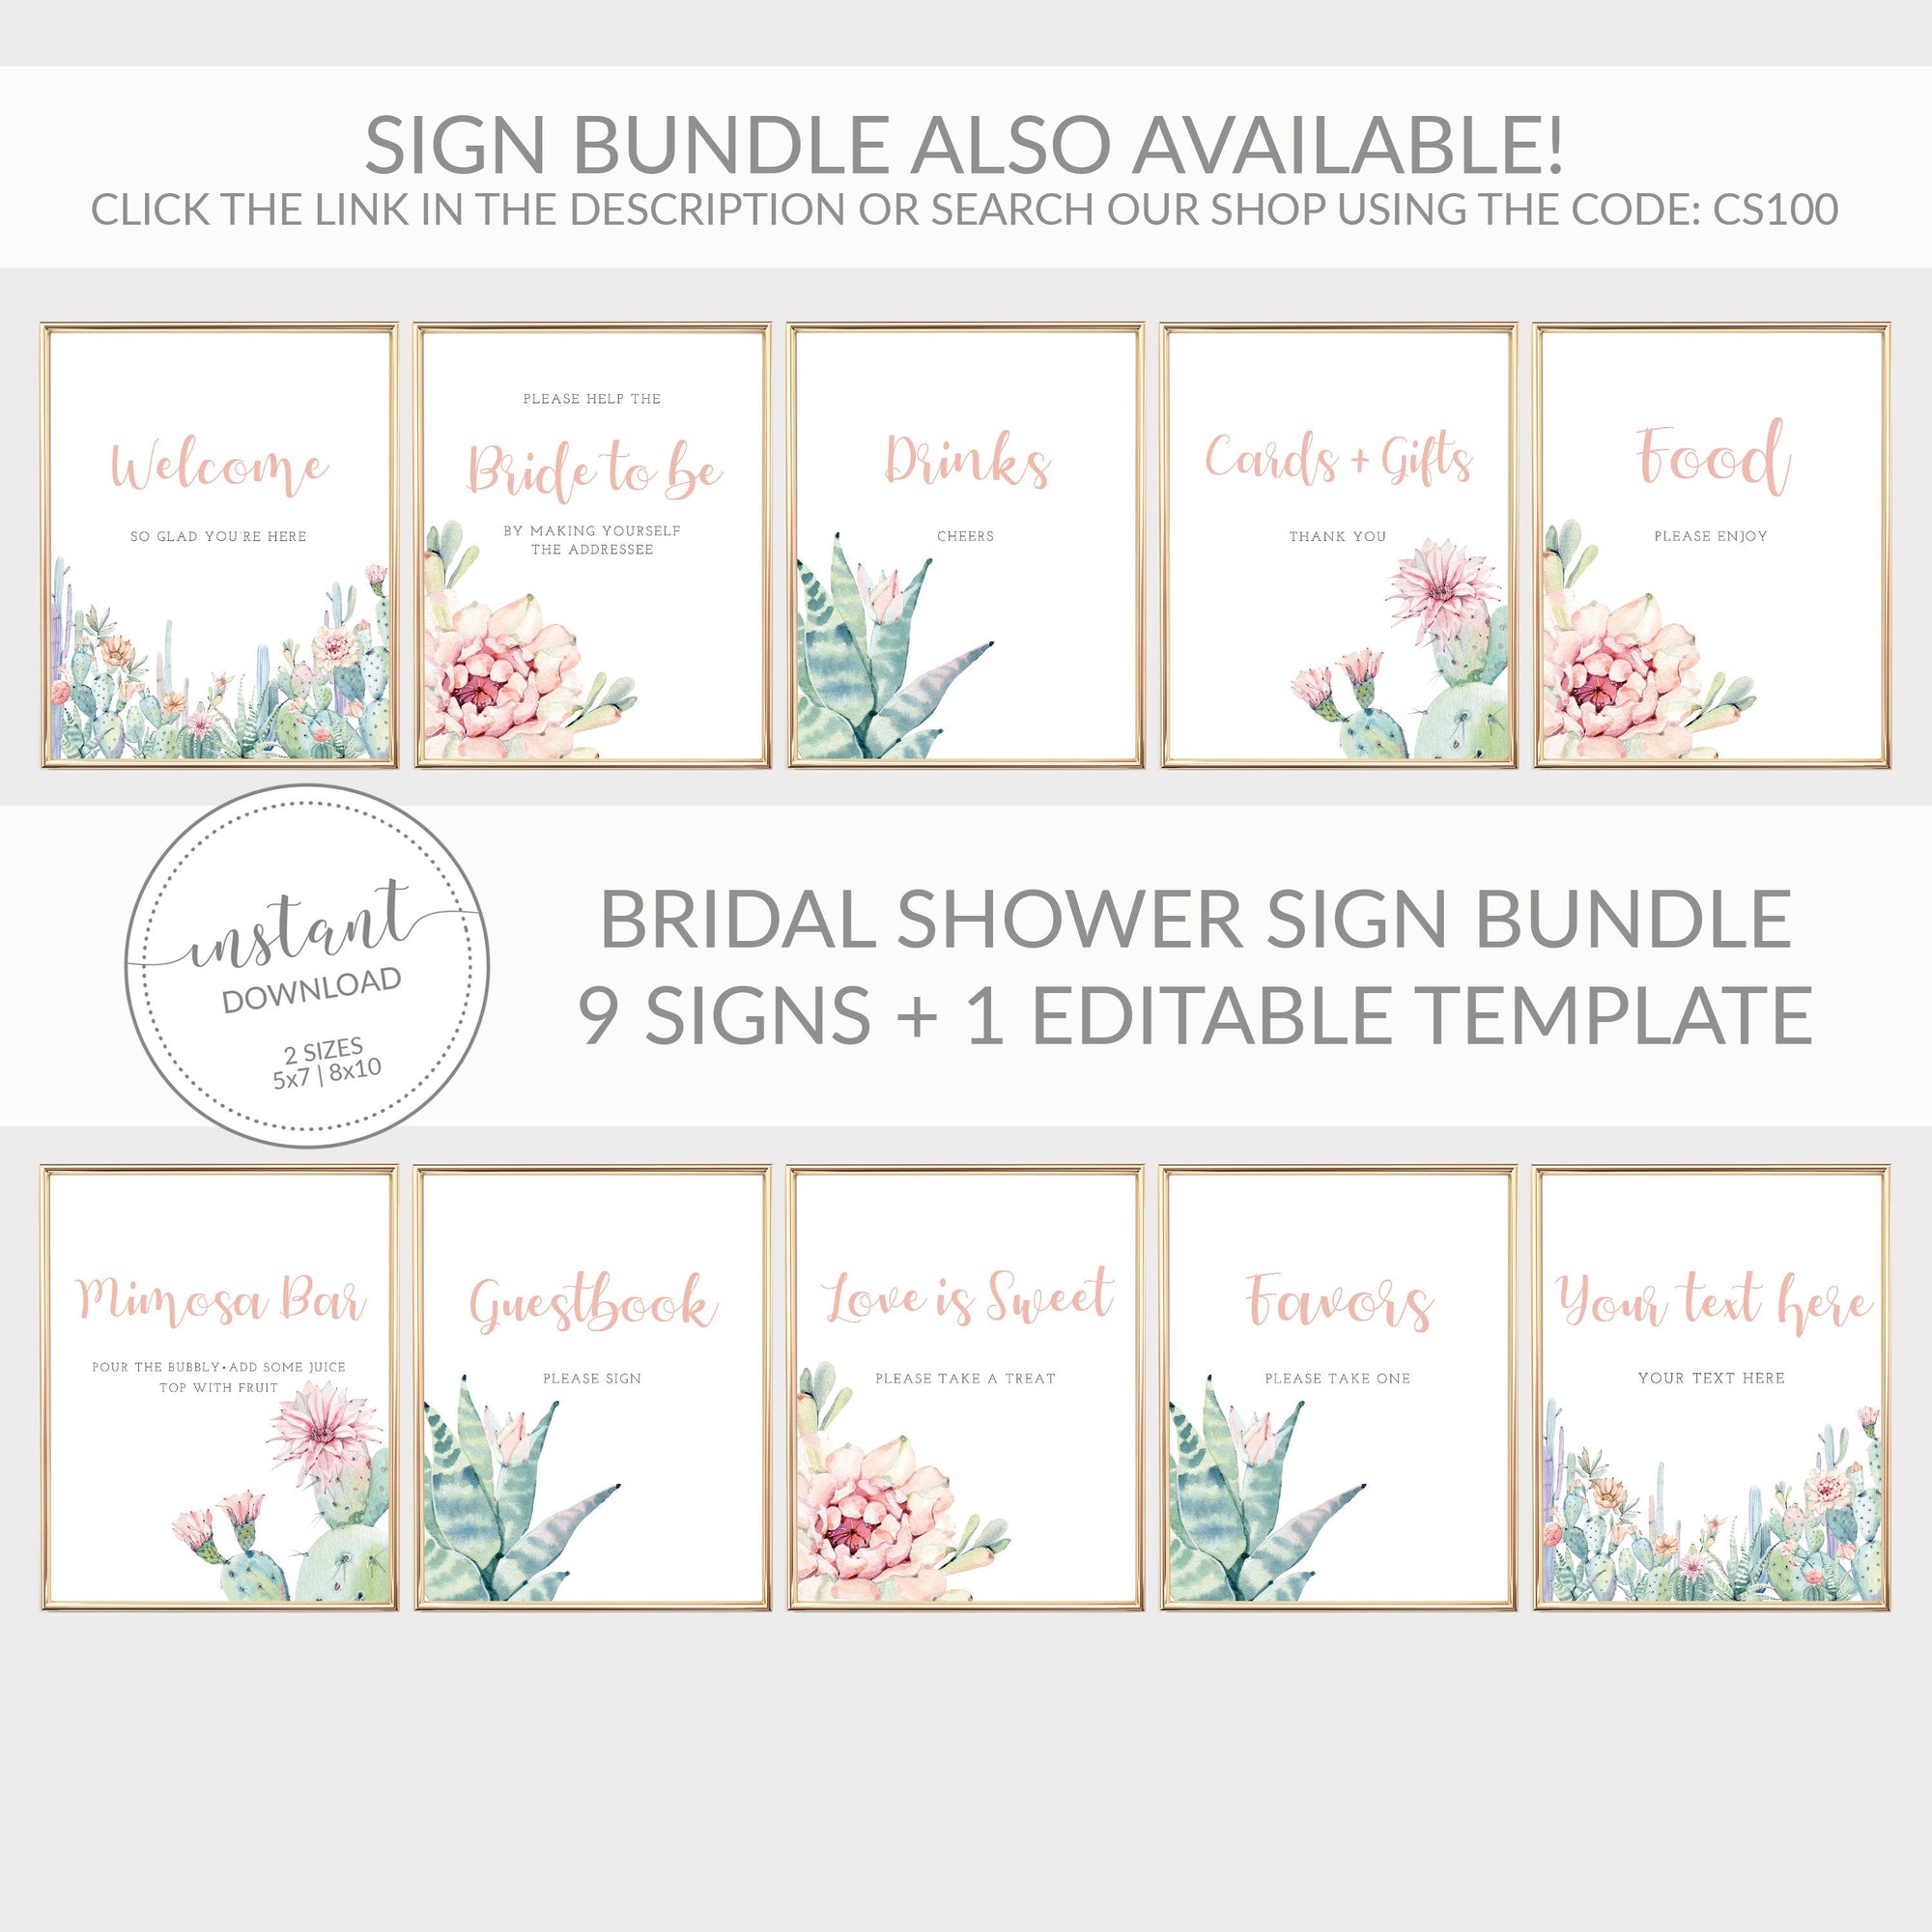 Succulent Drinks Sign Printable, Succulent Bridal Shower Sign, Succulent Baby Shower Table Signs, DIGITAL DOWNLOAD - CS100 - @PlumPolkaDot 